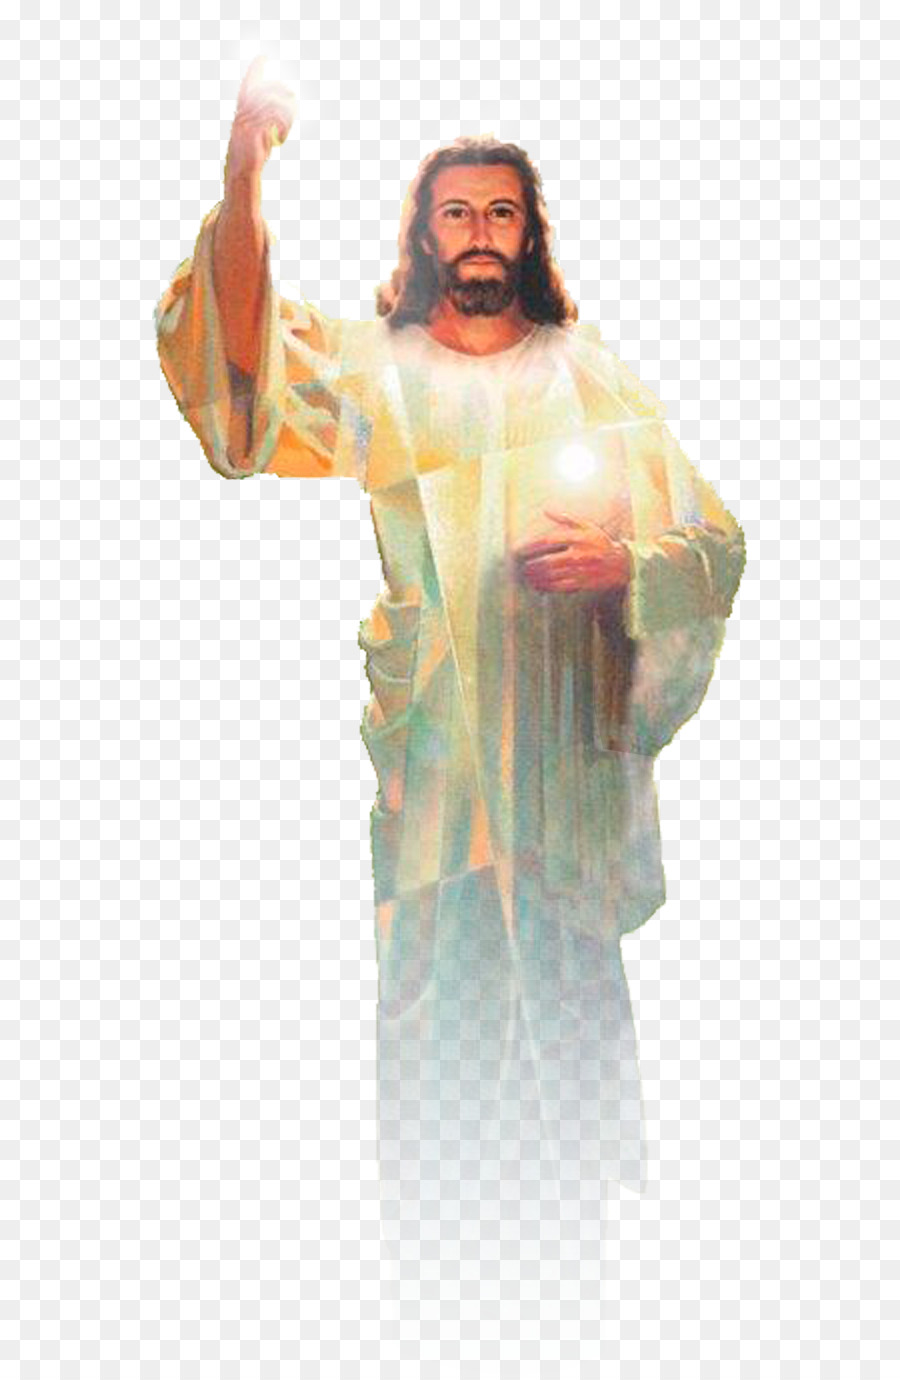 Jesus Body of Christ Divine Mercy - jesus christ png download - 595*1376 - Free Transparent Jesus png Download.